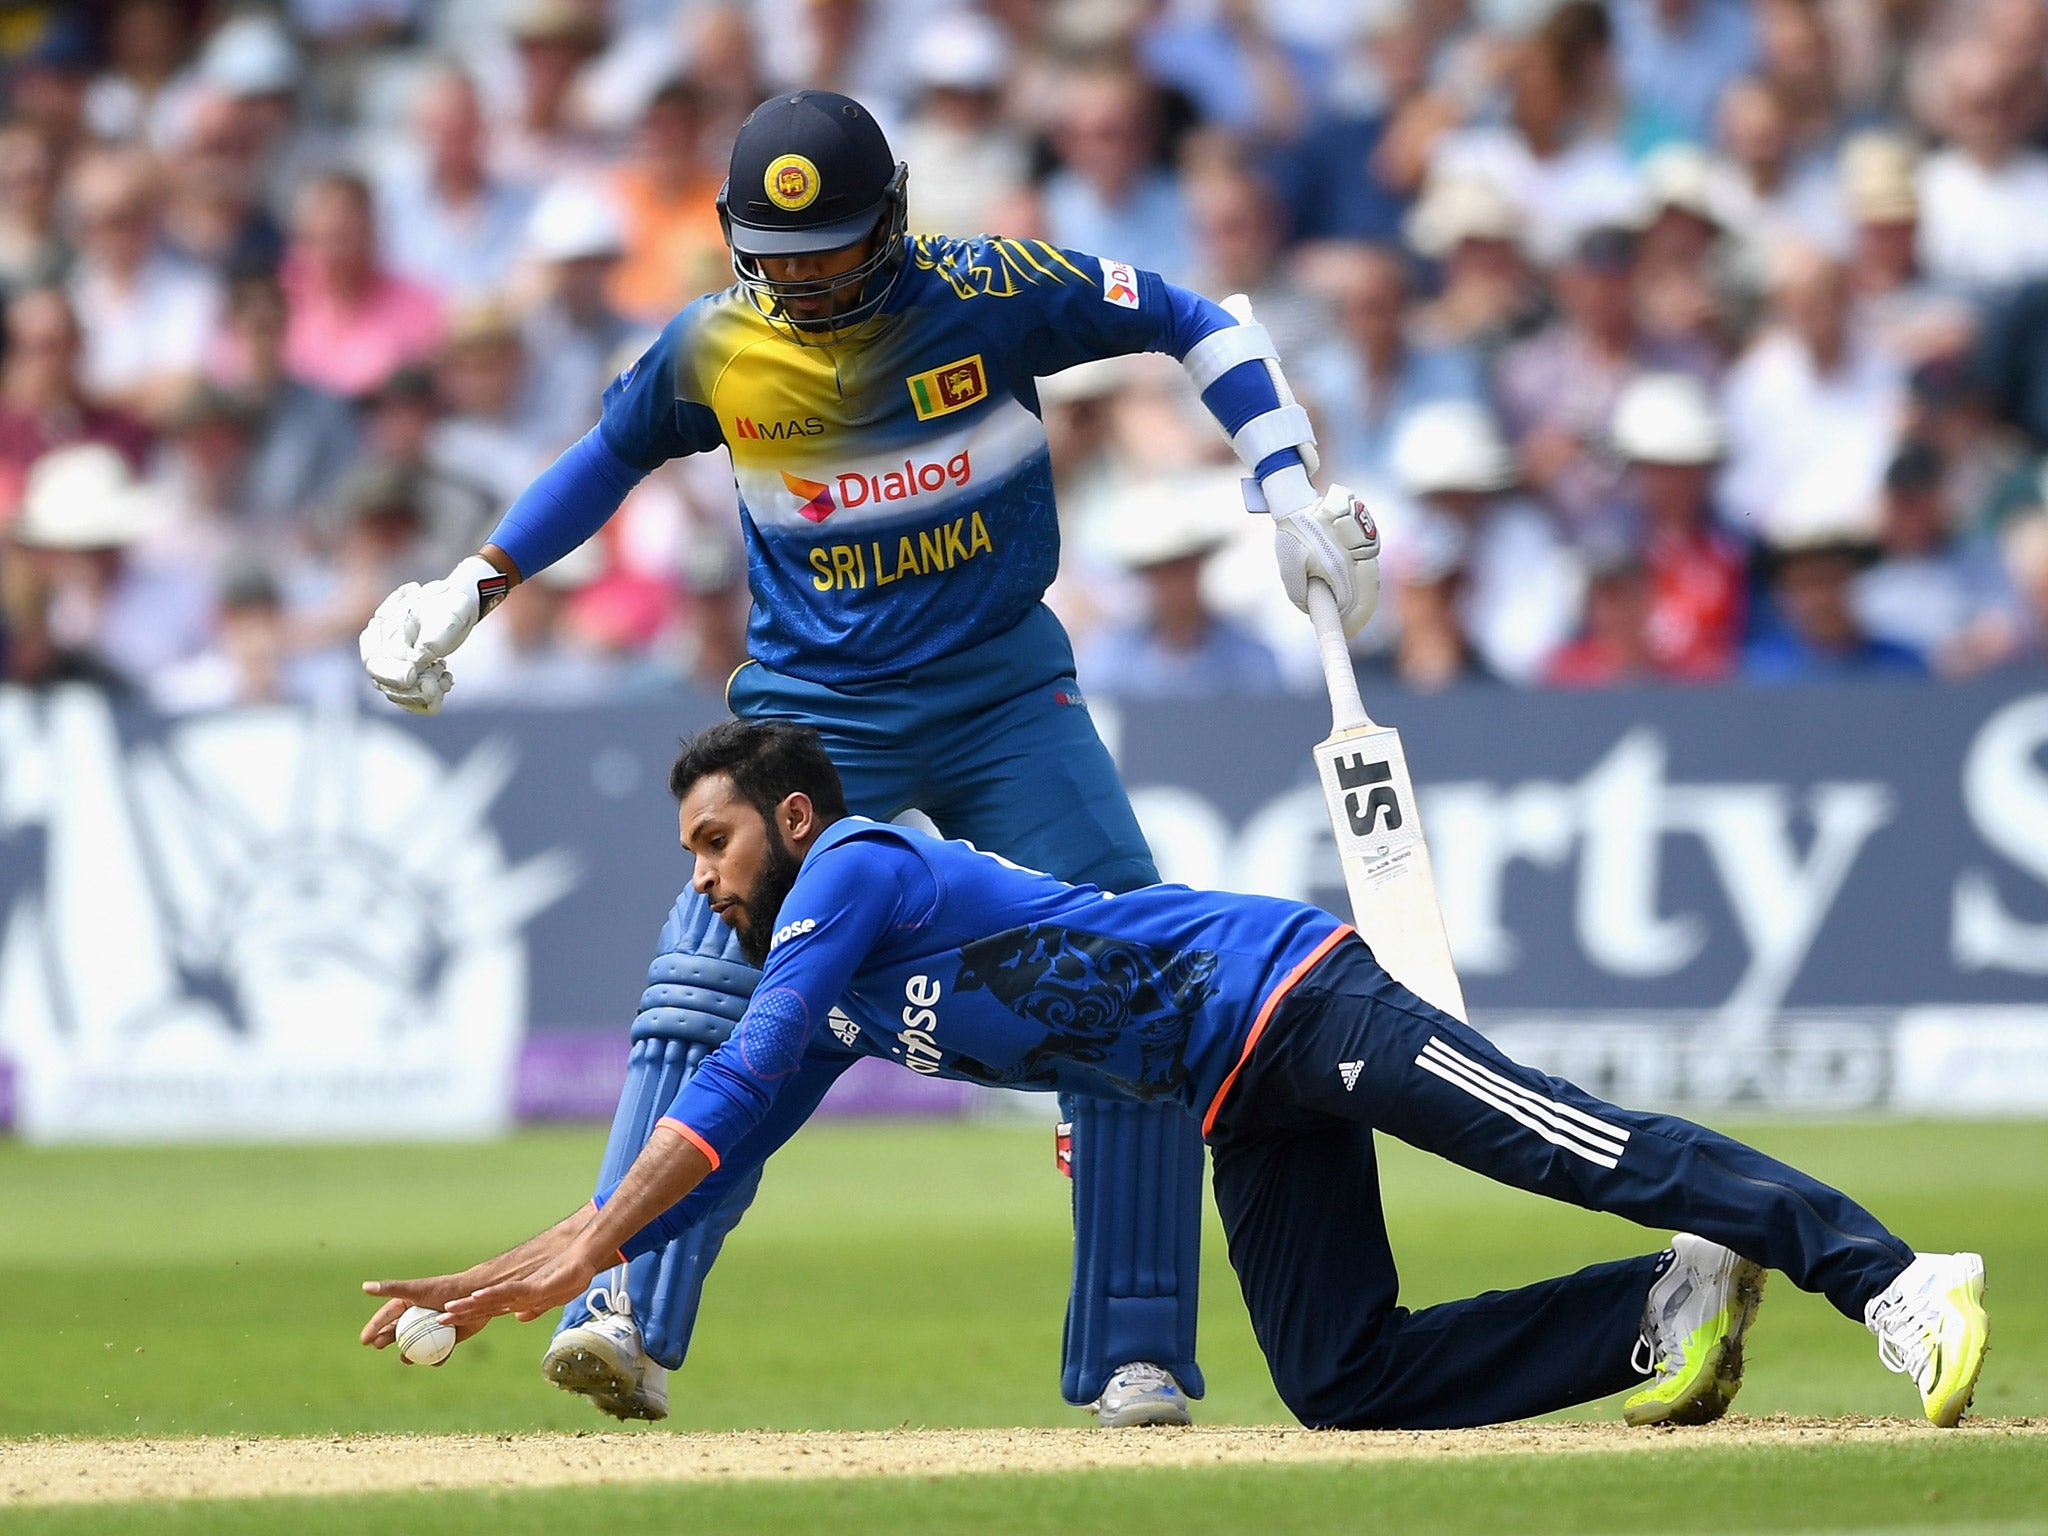 Adil Rashid is targeting a return to the England Test team